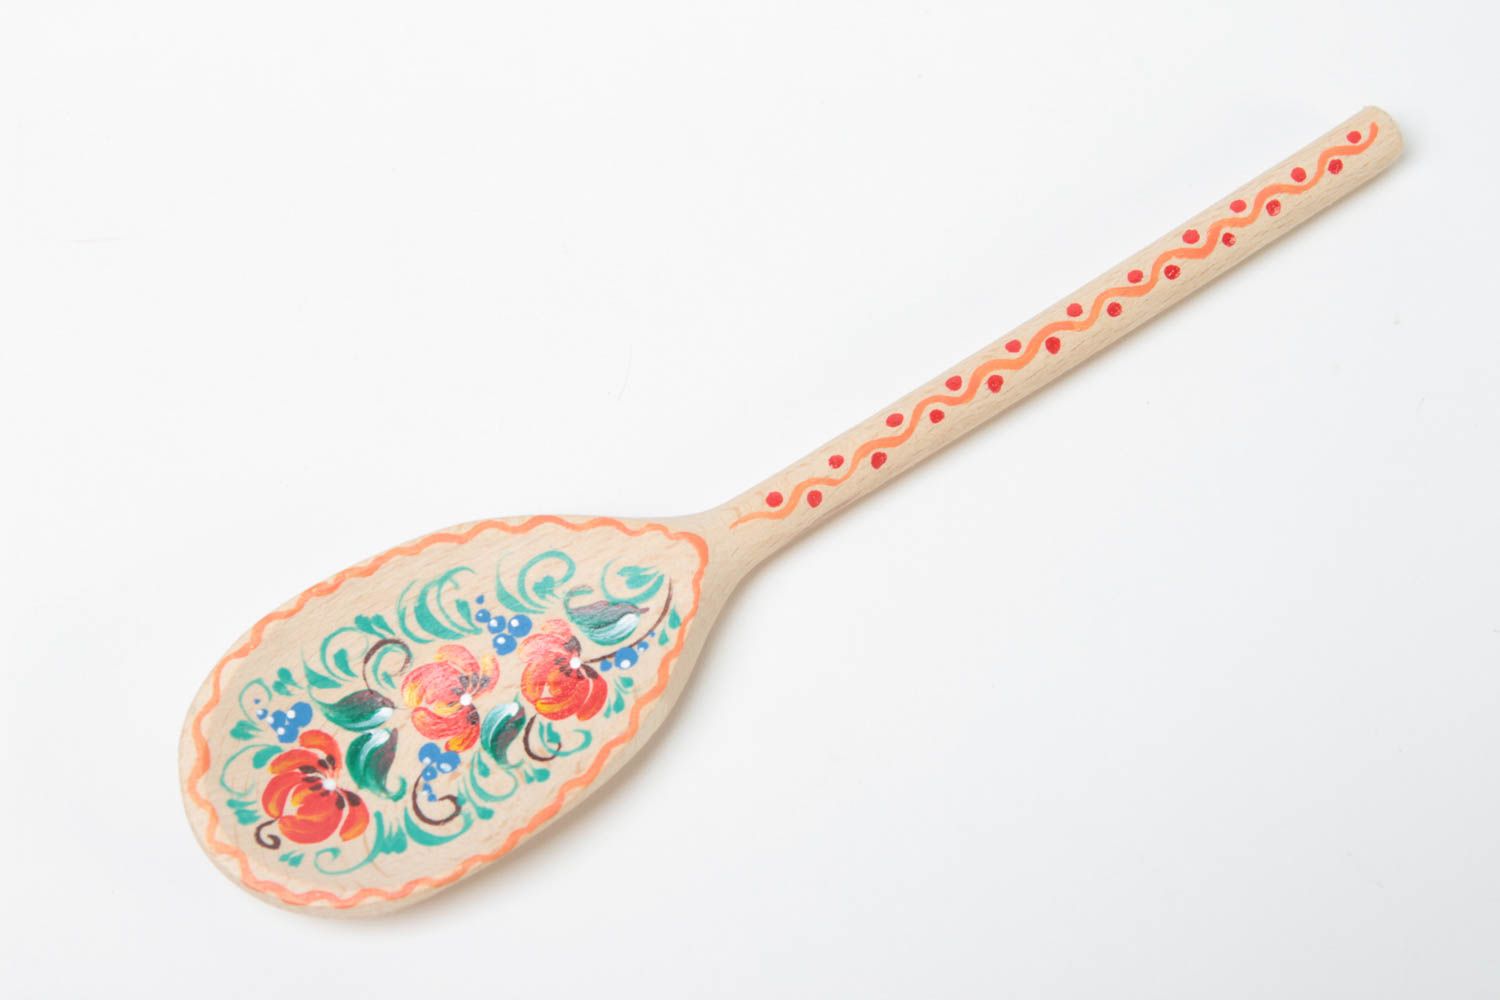 Handmade spoon wooden cutlery unusual gift decor ideas kitchen accessories photo 2